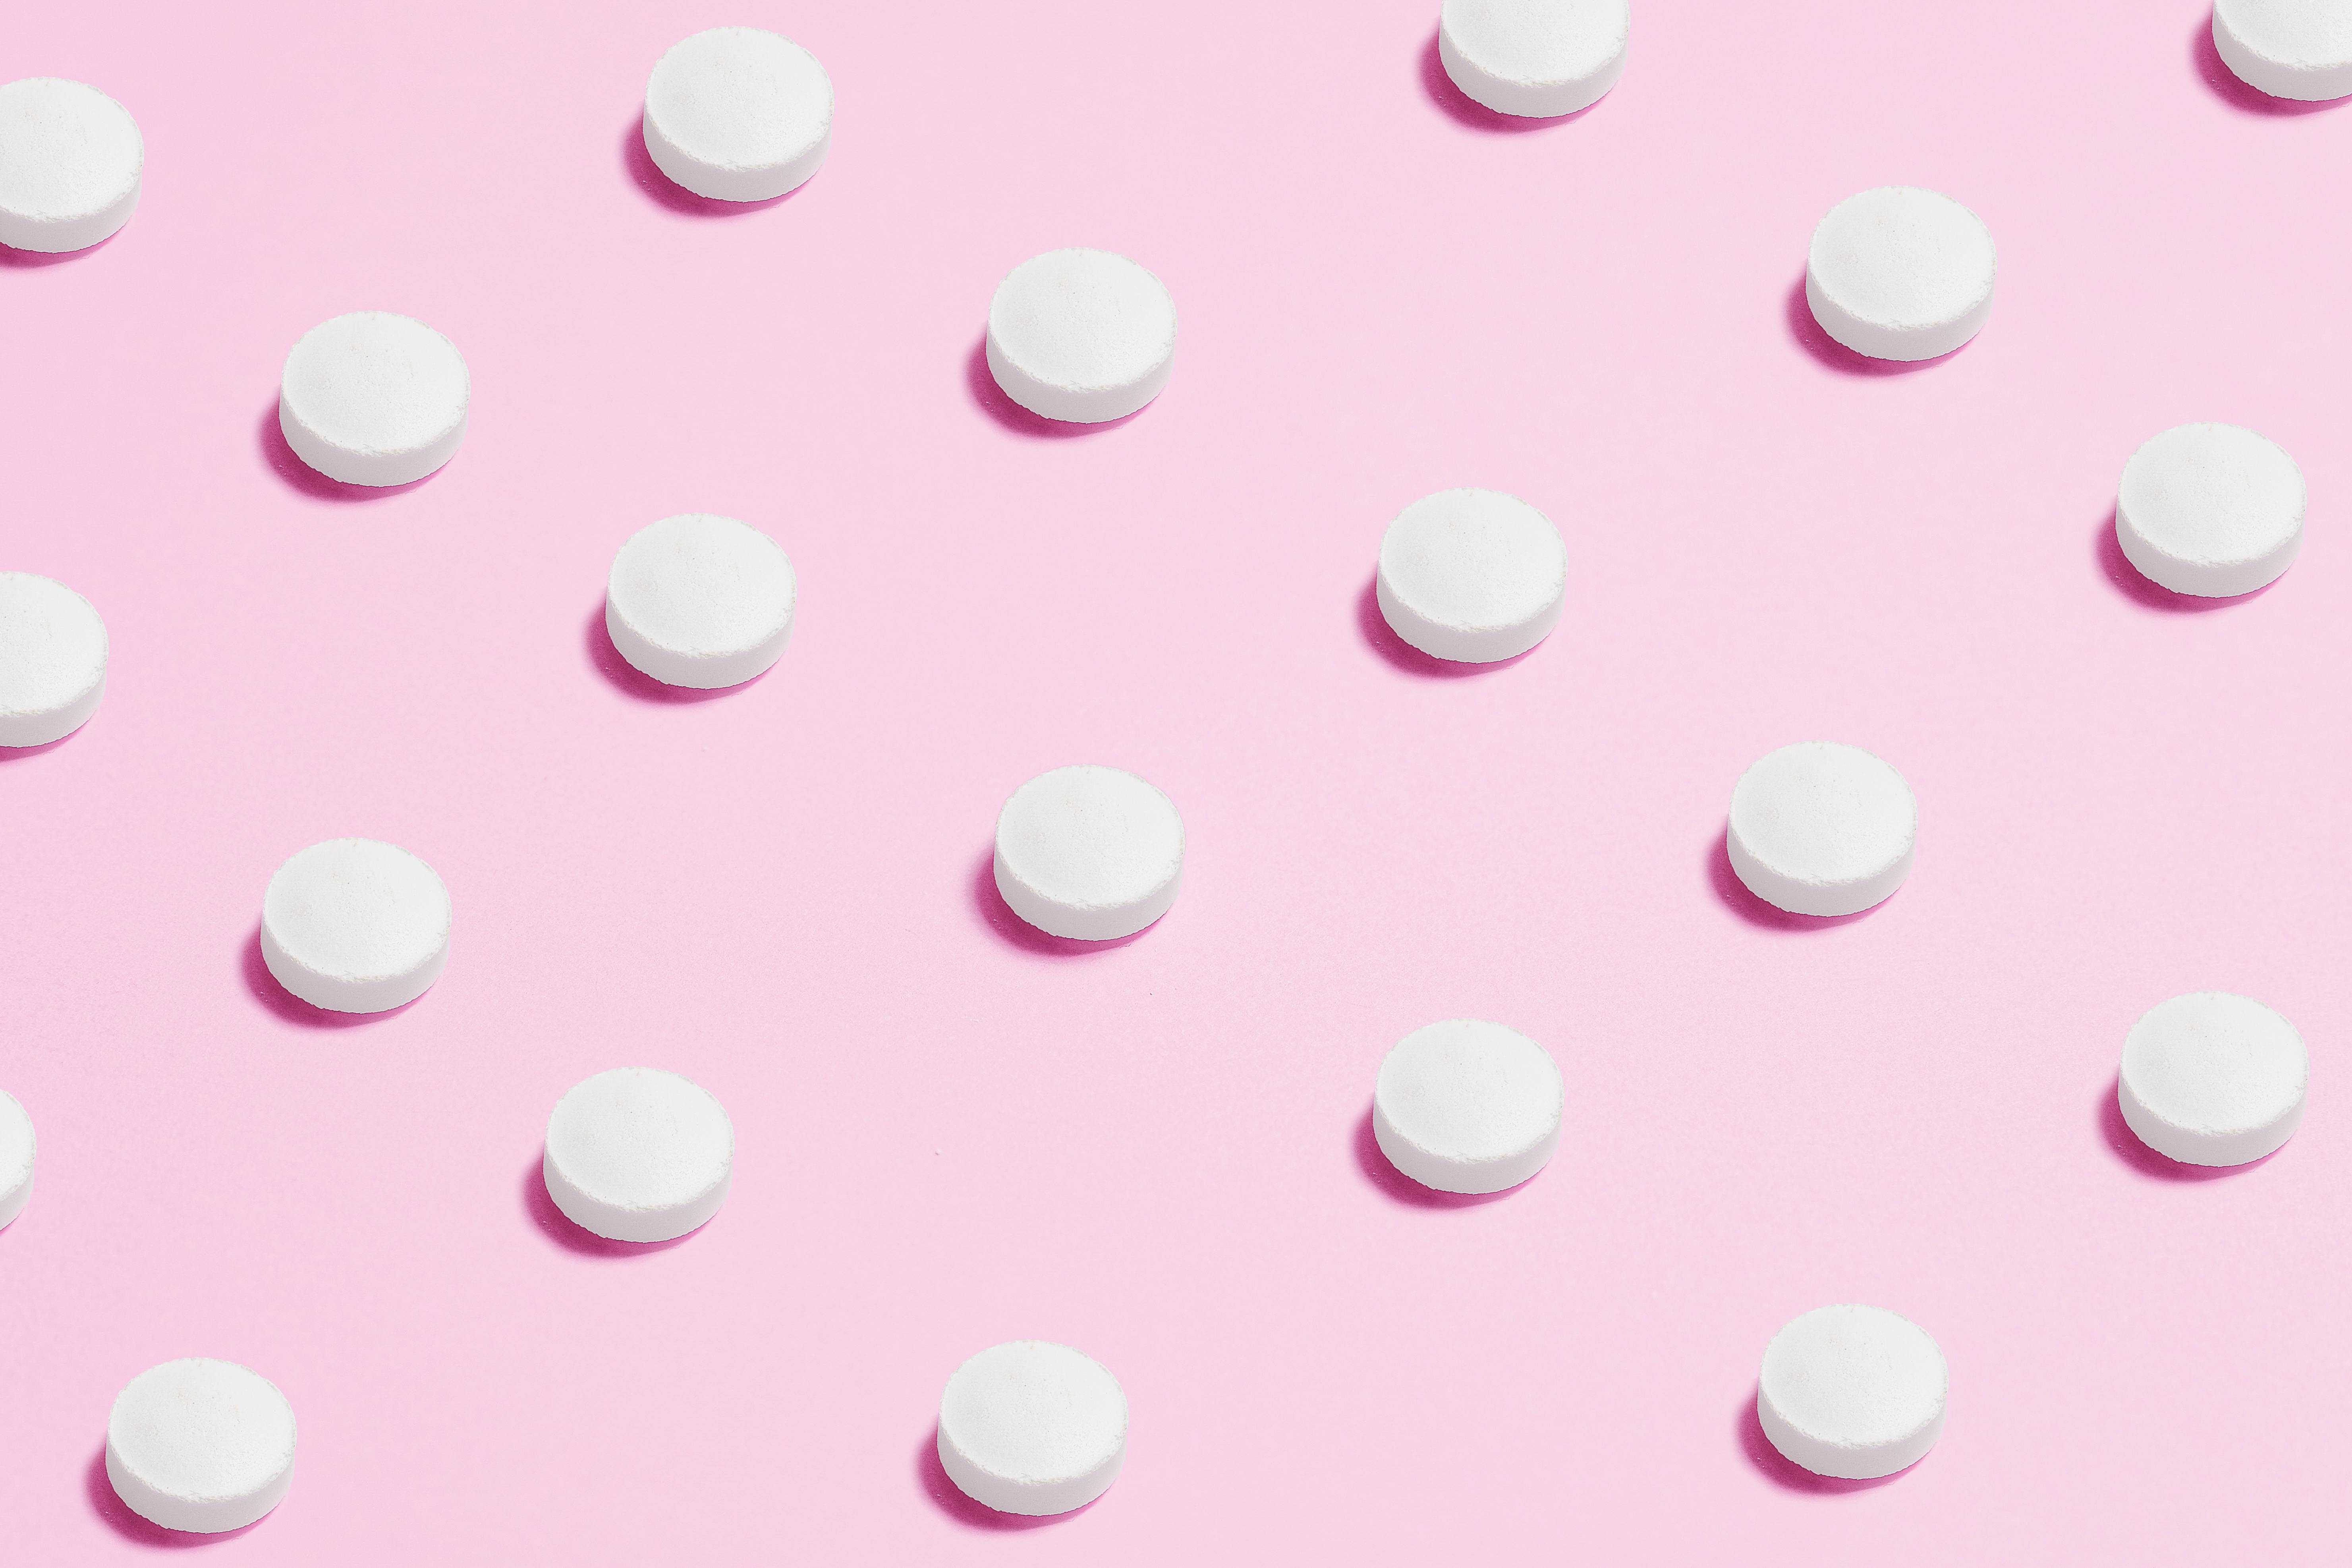 Pills on pink background.